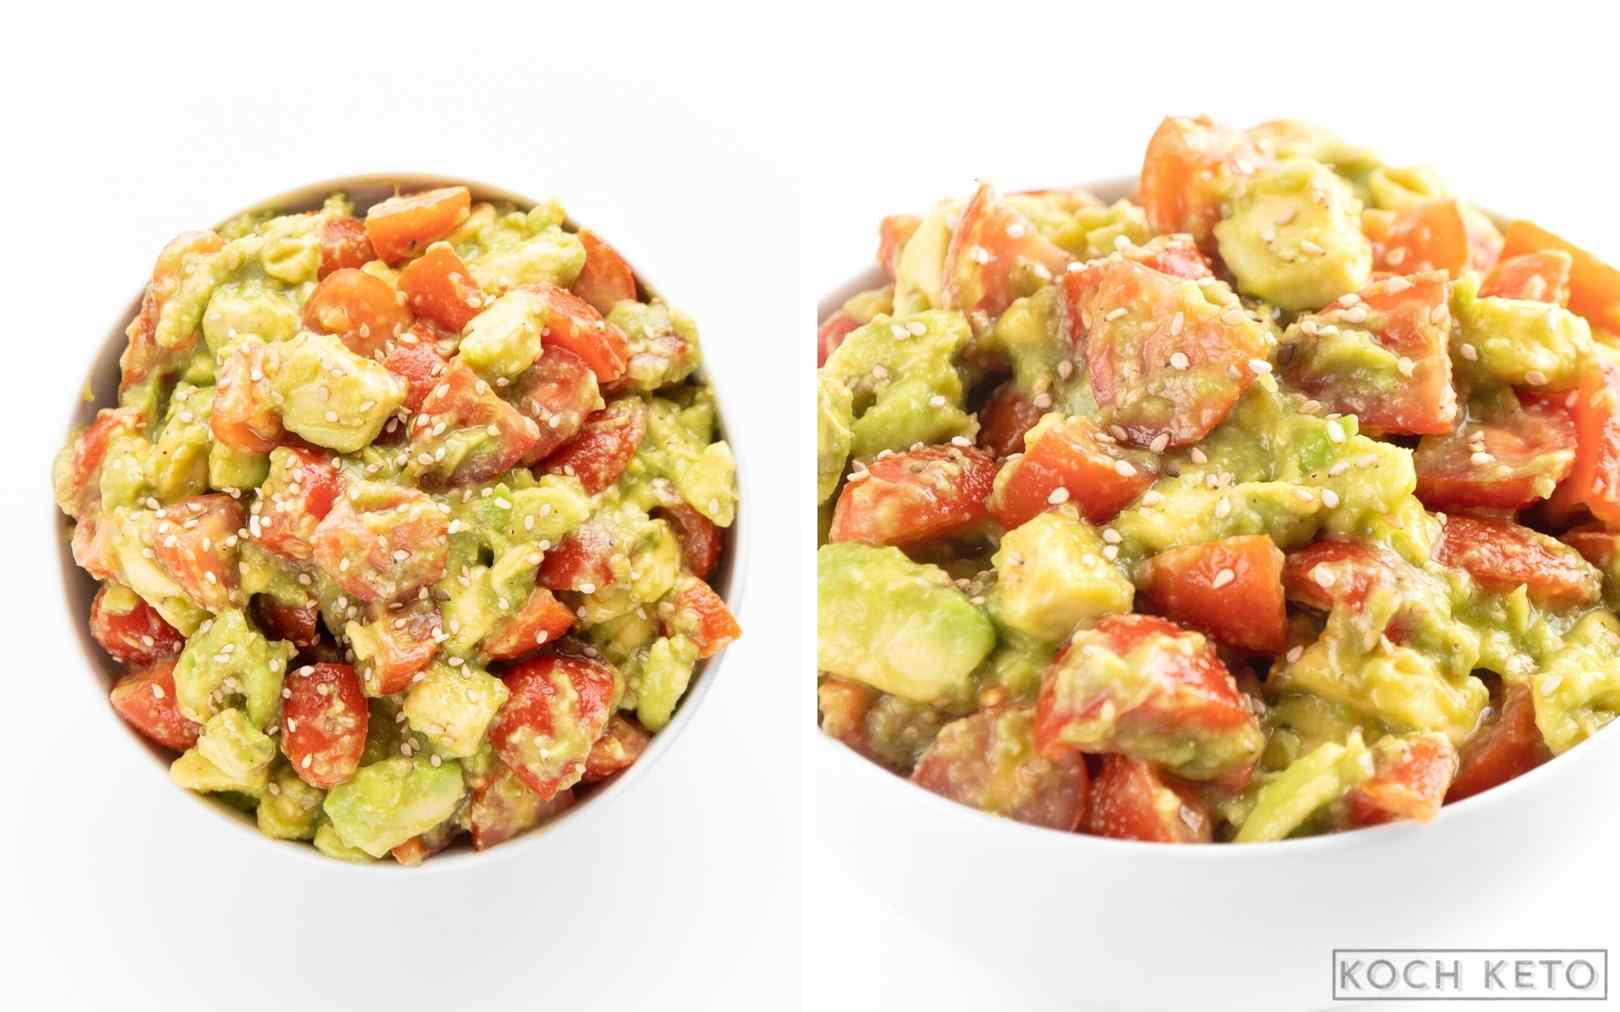 Schneller Keto Avocado-Tomaten-Salat als einfacher ketogener Snack ohne Kohlenhydrate Desktop Image Collage